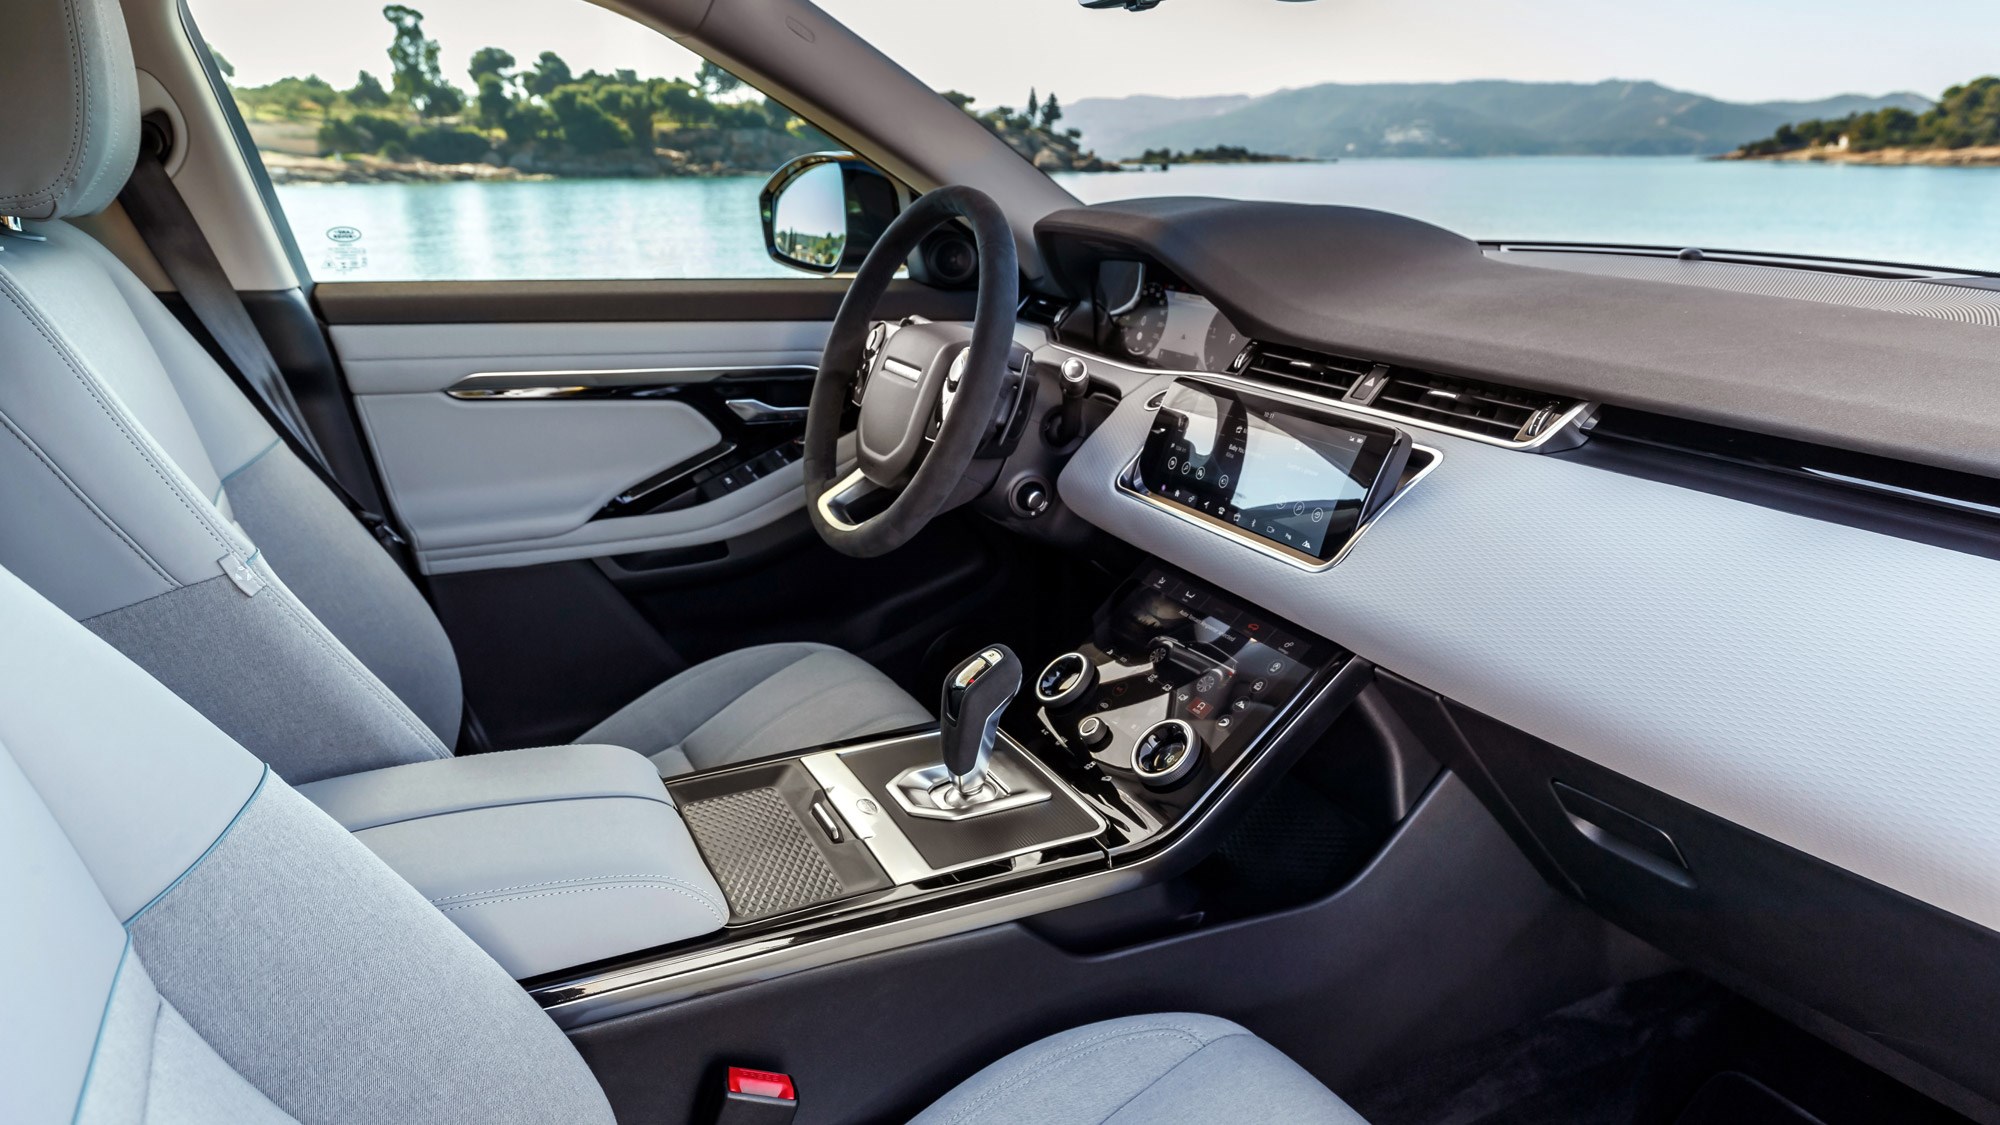 Range Rover Evoque interior: A huge quality uplift over its predecessor